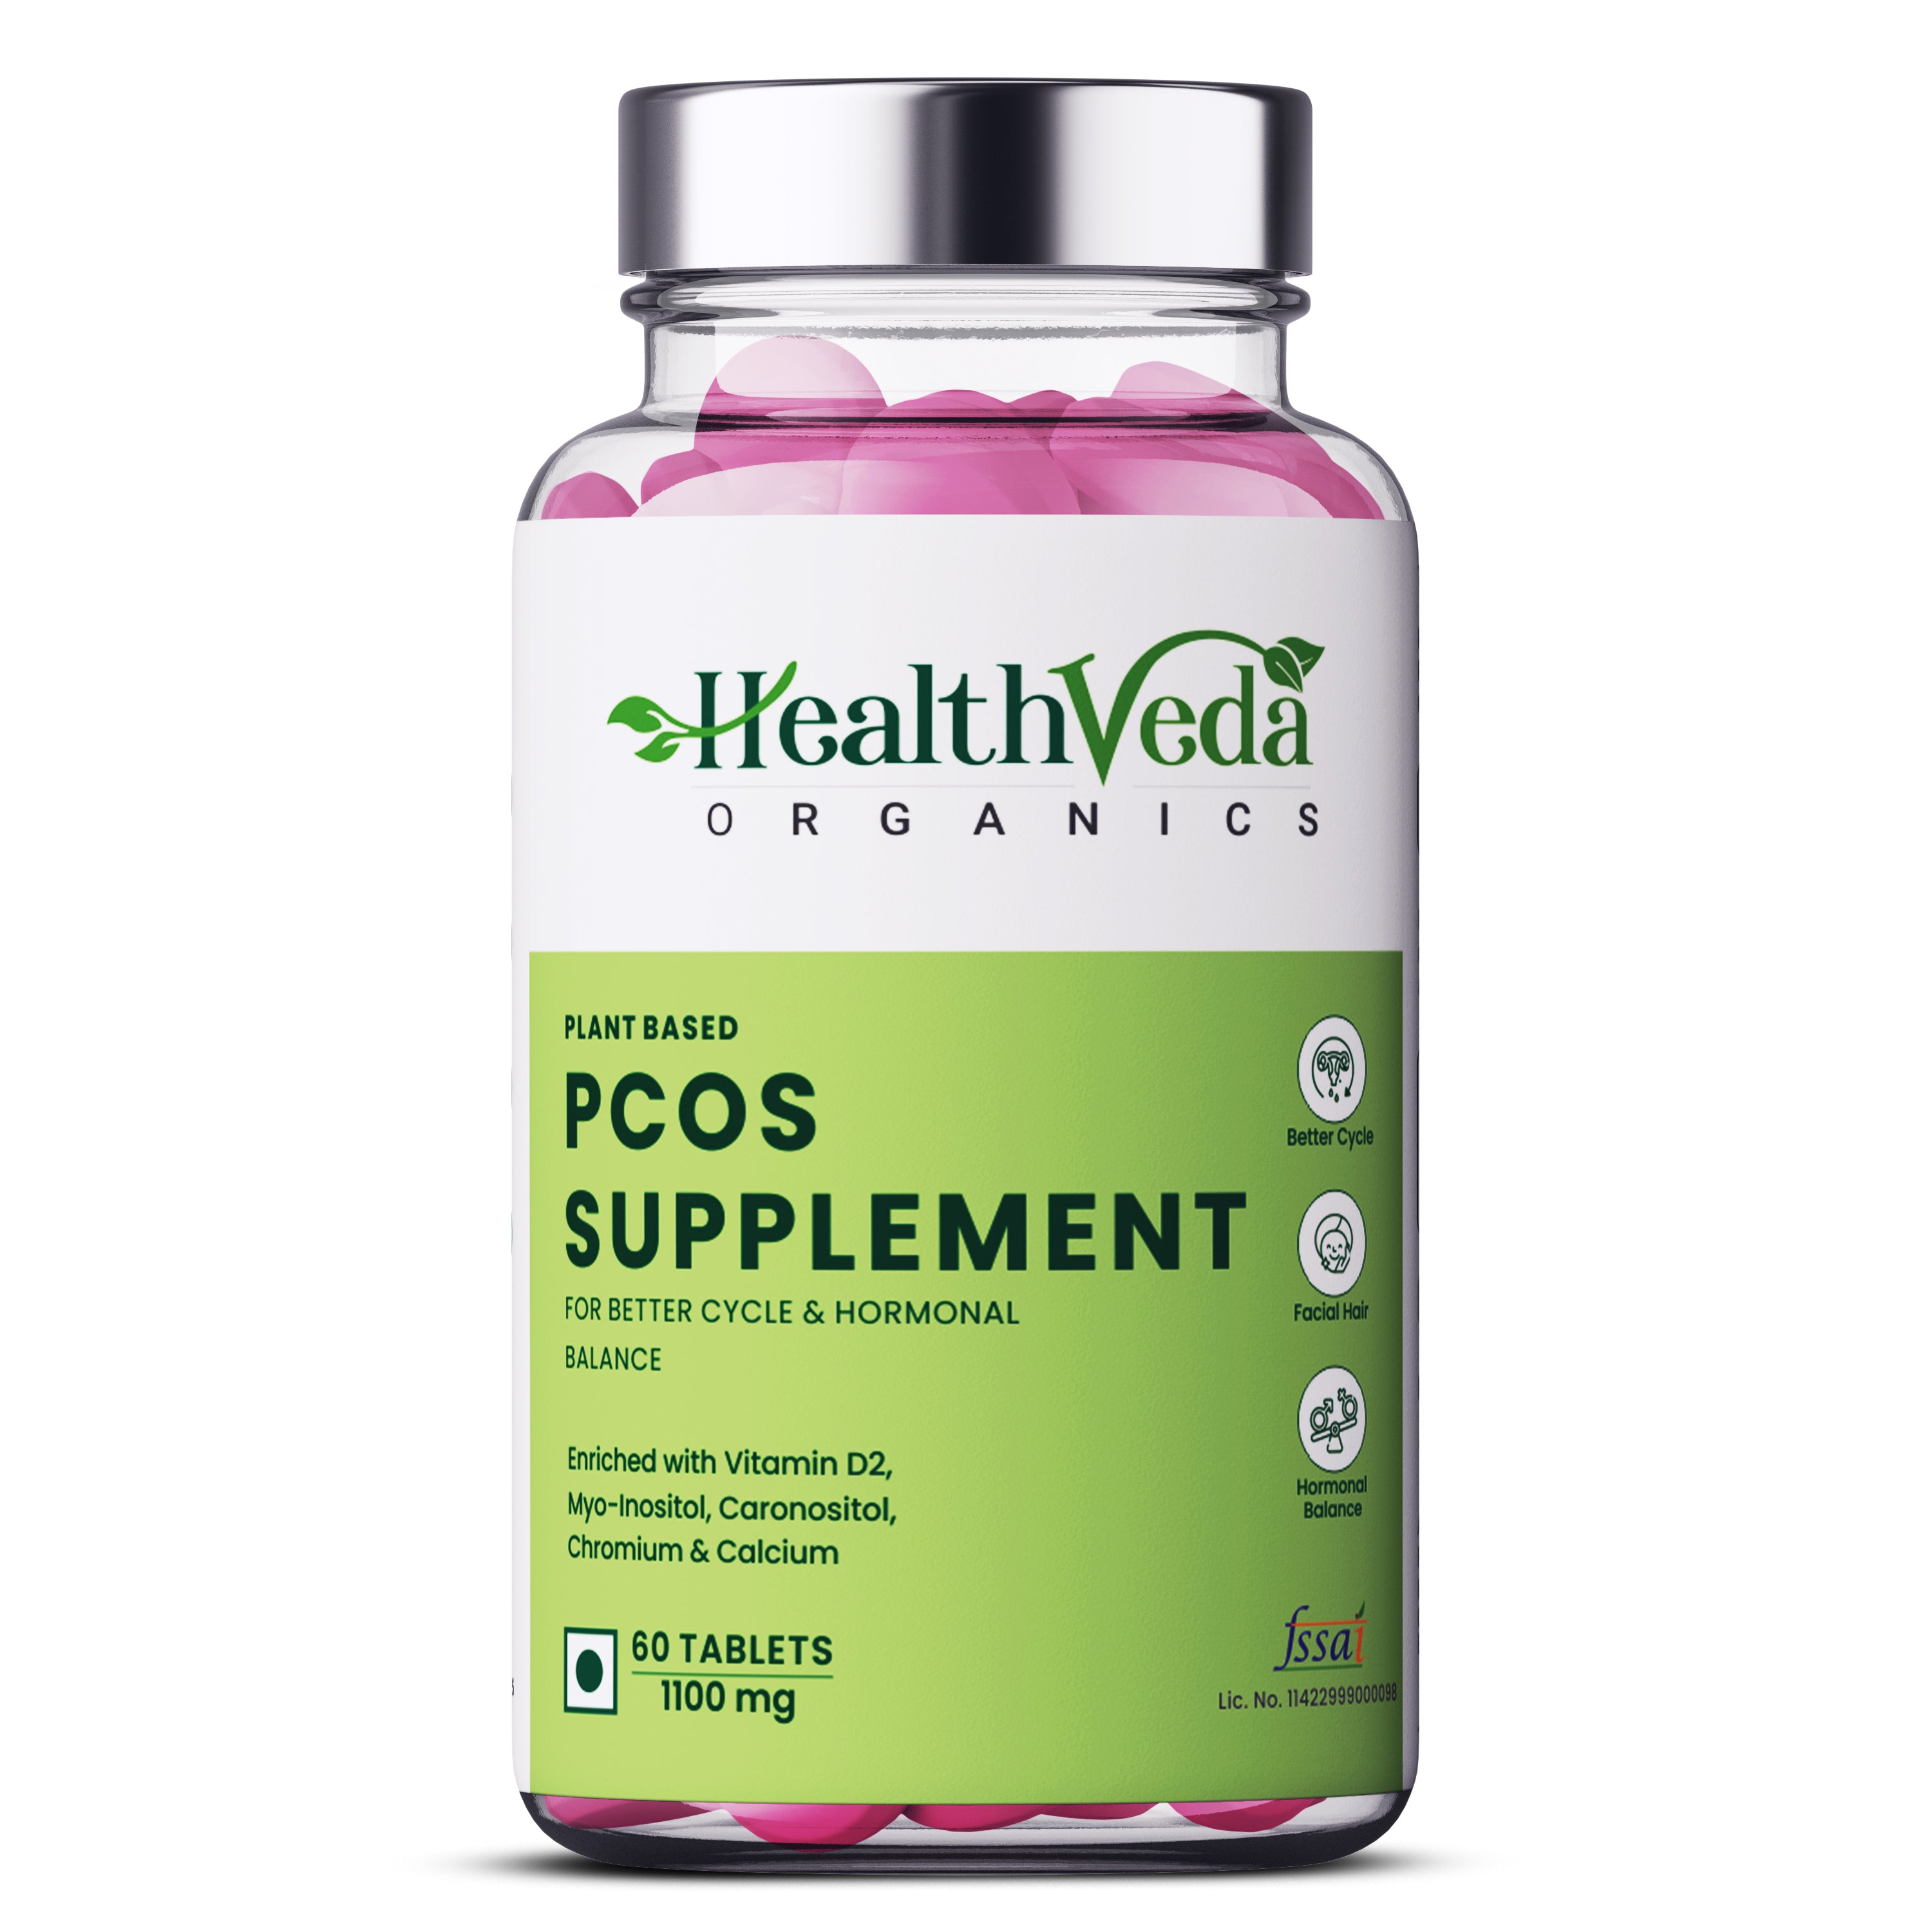 Health Veda Organics PCOS Supplement 1100 mg